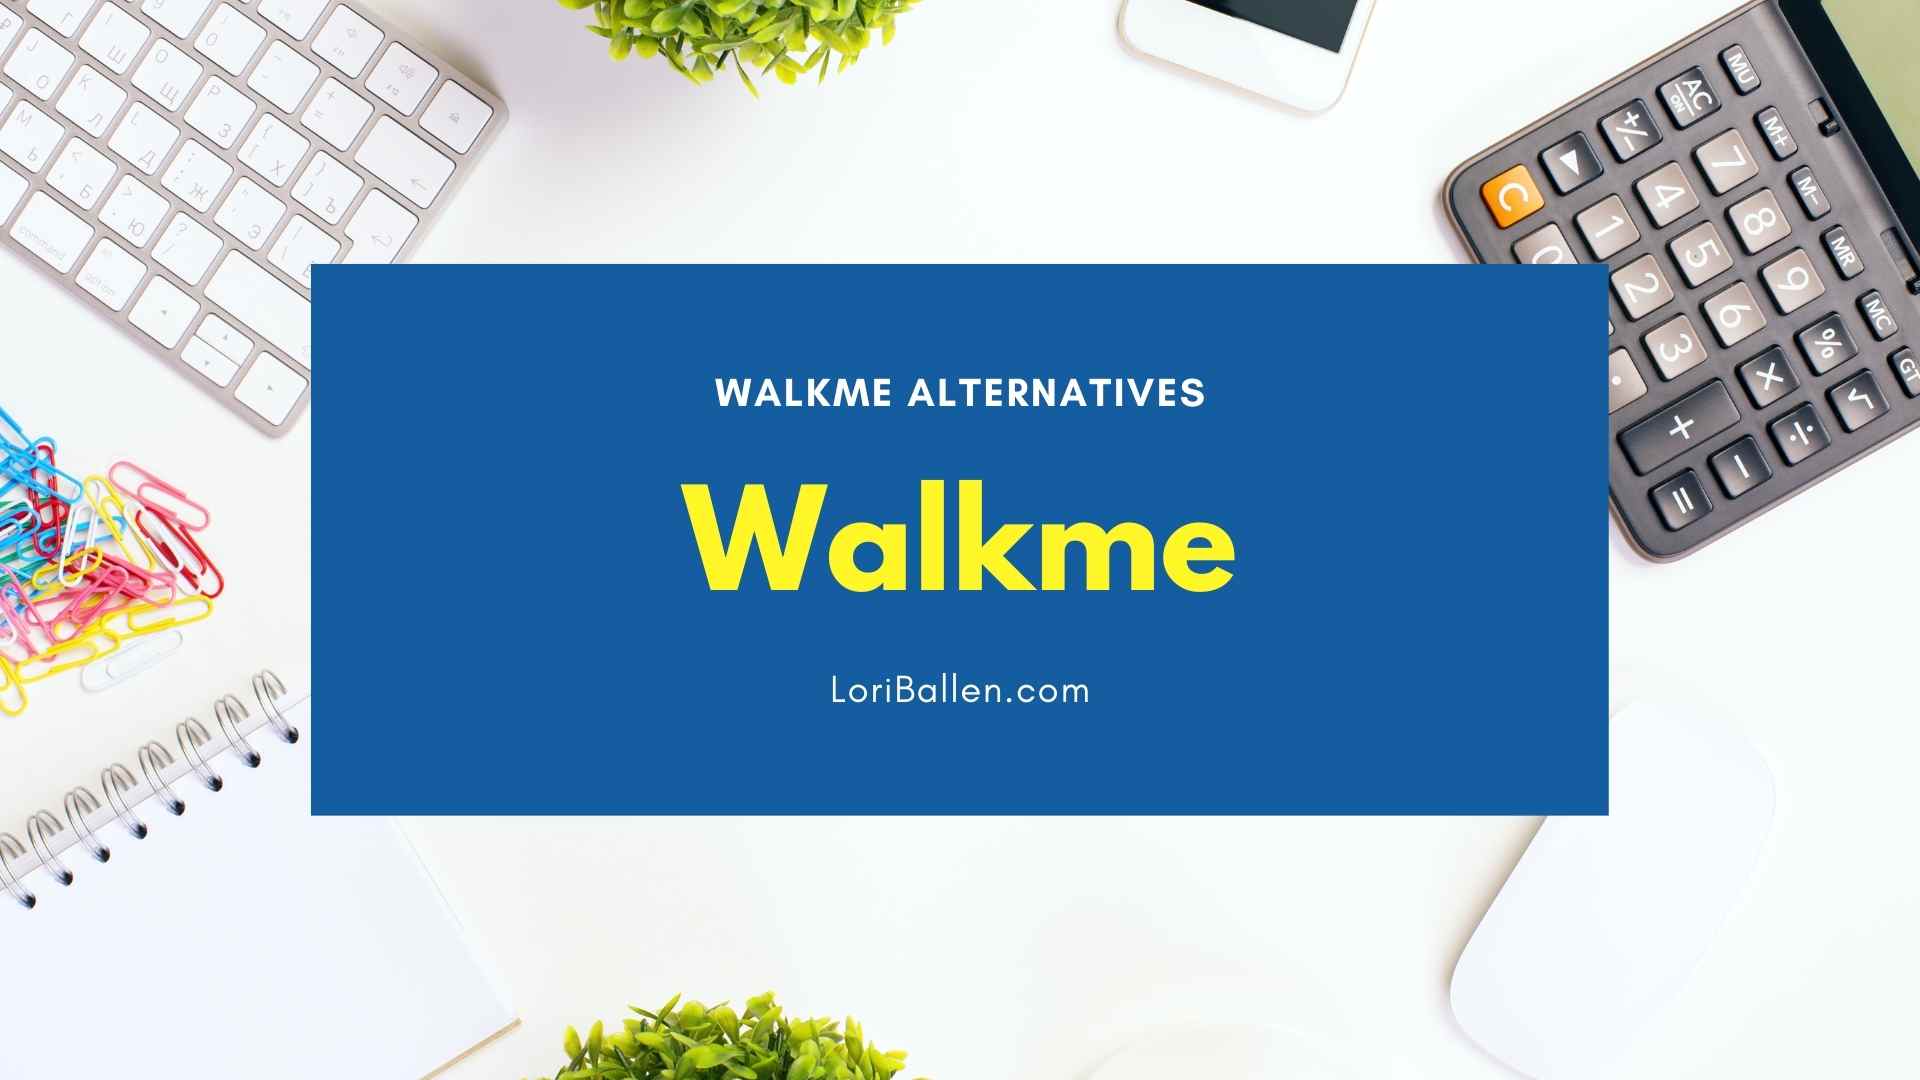 7 WalkMe Alternatives to Improve Website Usability